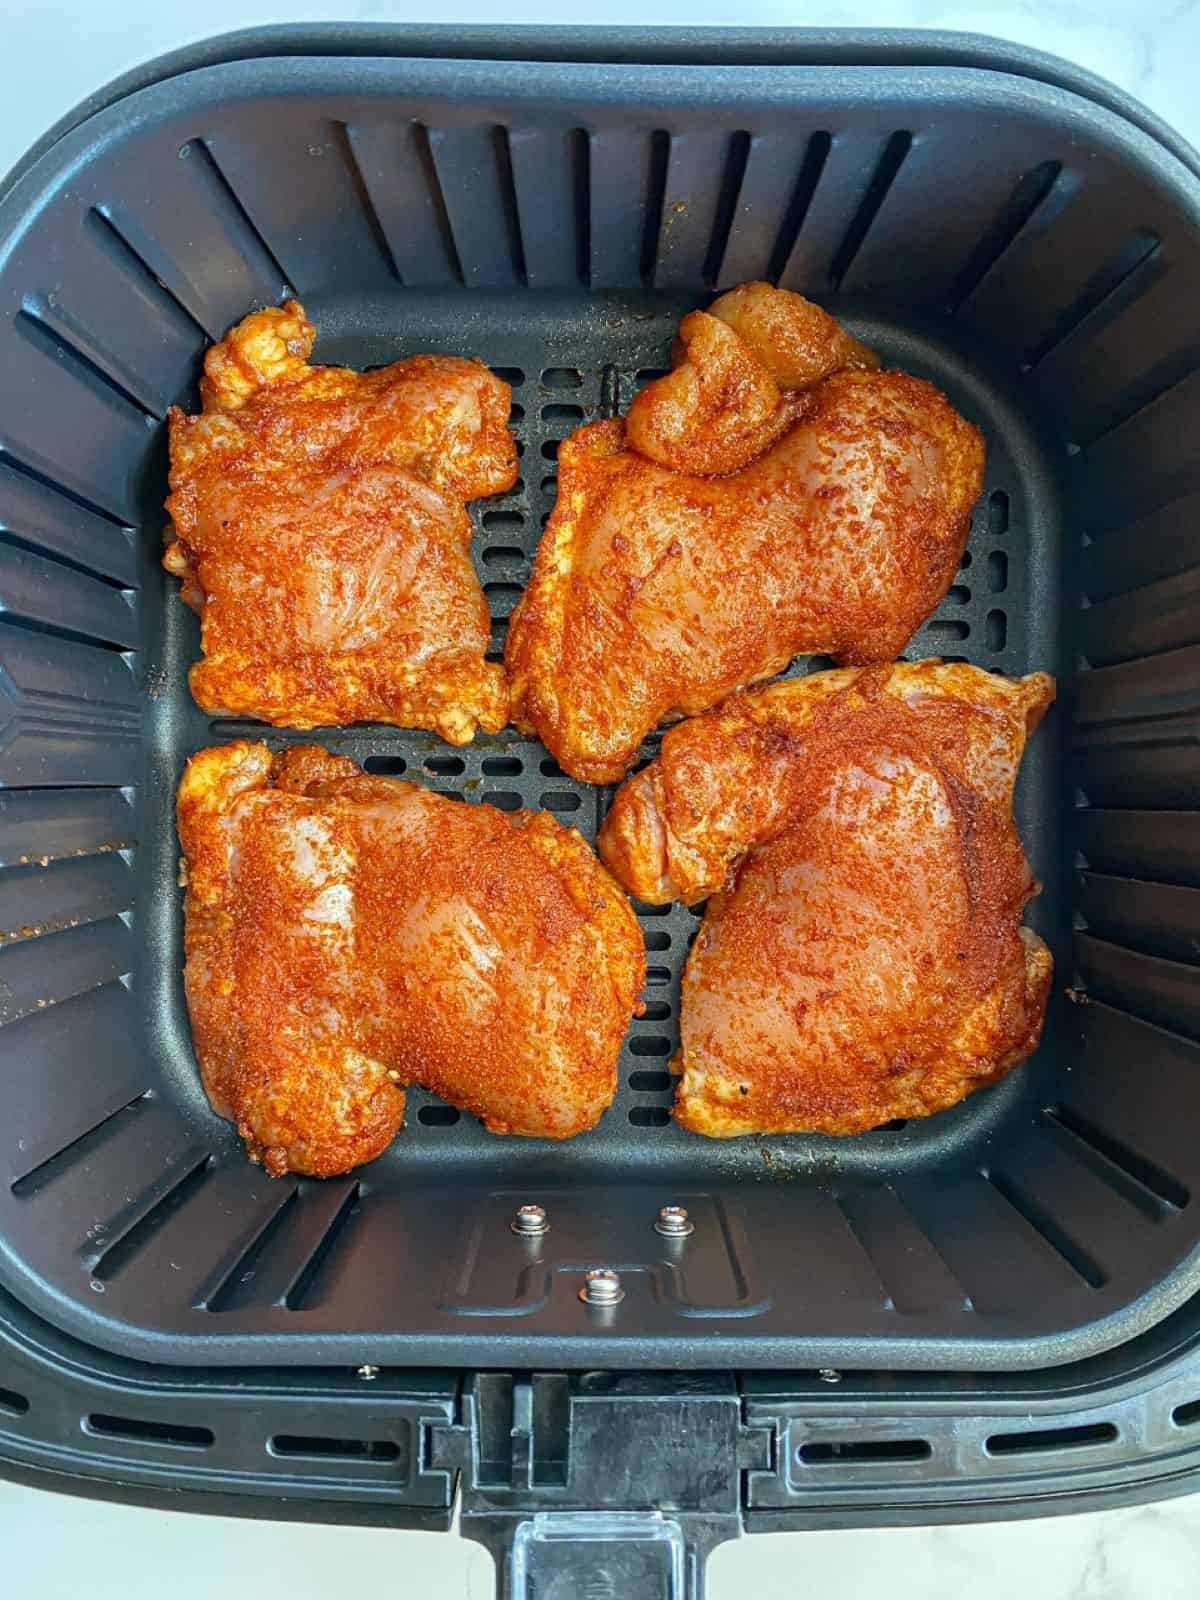 Uncooked chicken thighs in air fryer basket.